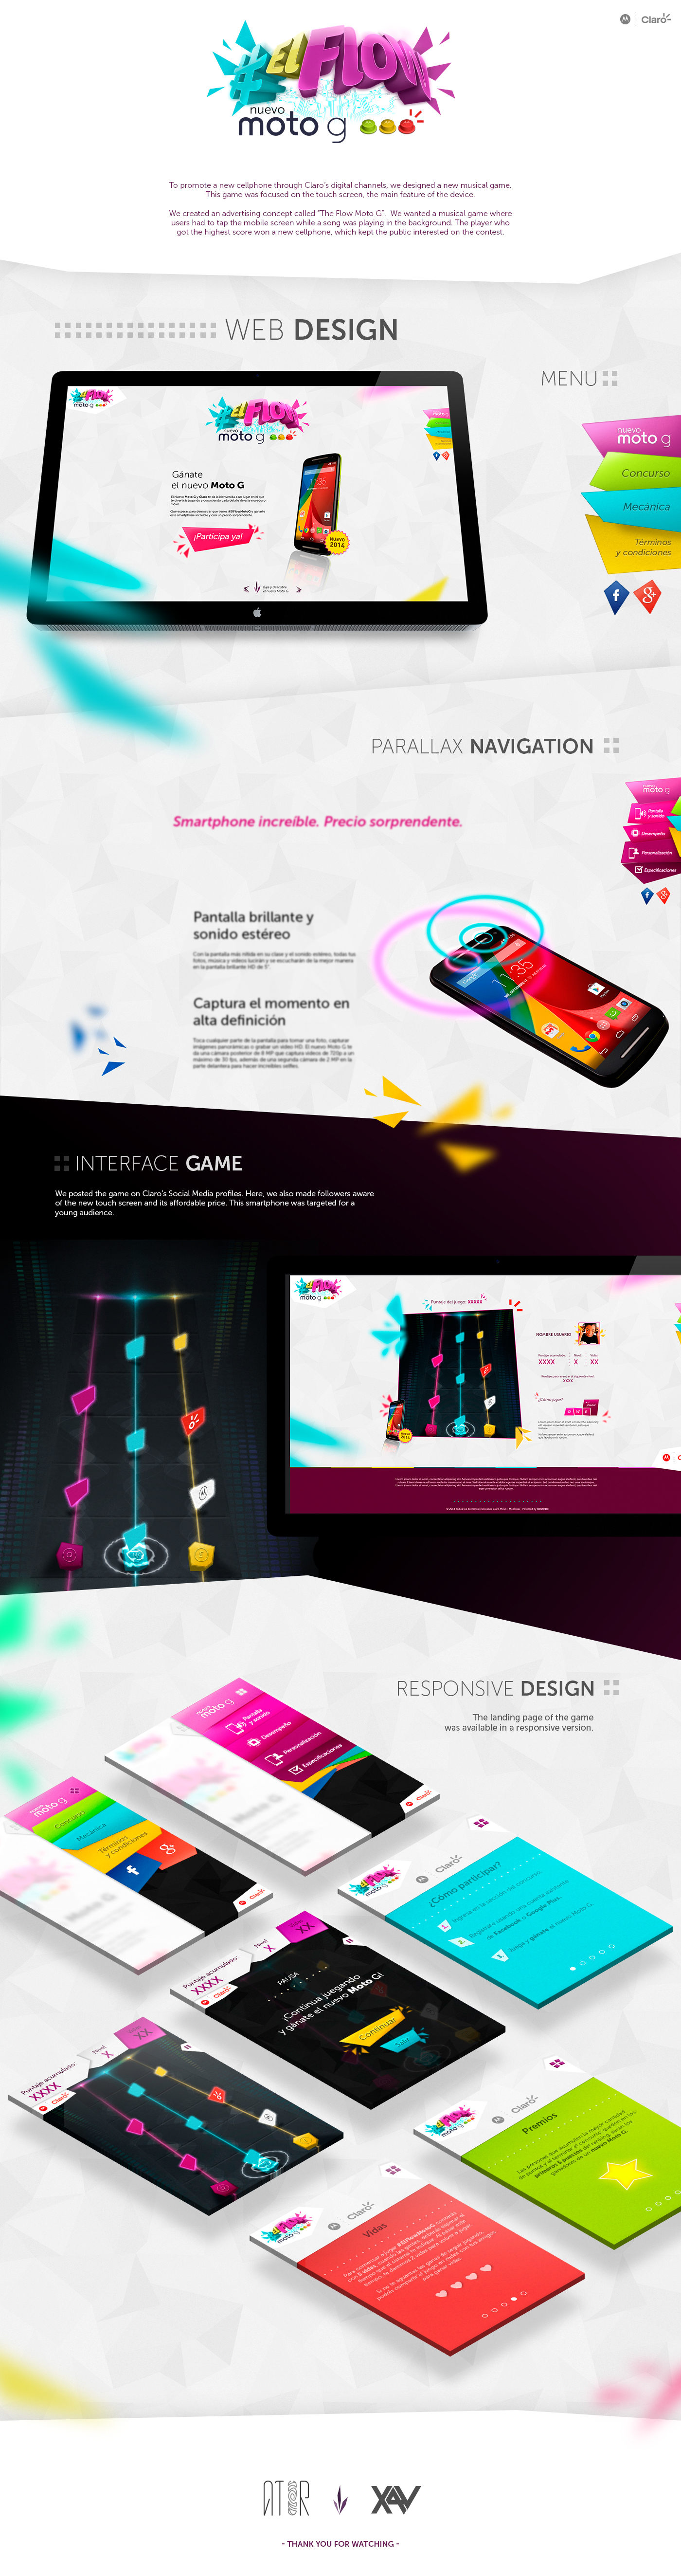 Web UX UI user experience motorola claro design Responsive colombia bogota parallax flow Entertainment Moto G game social media